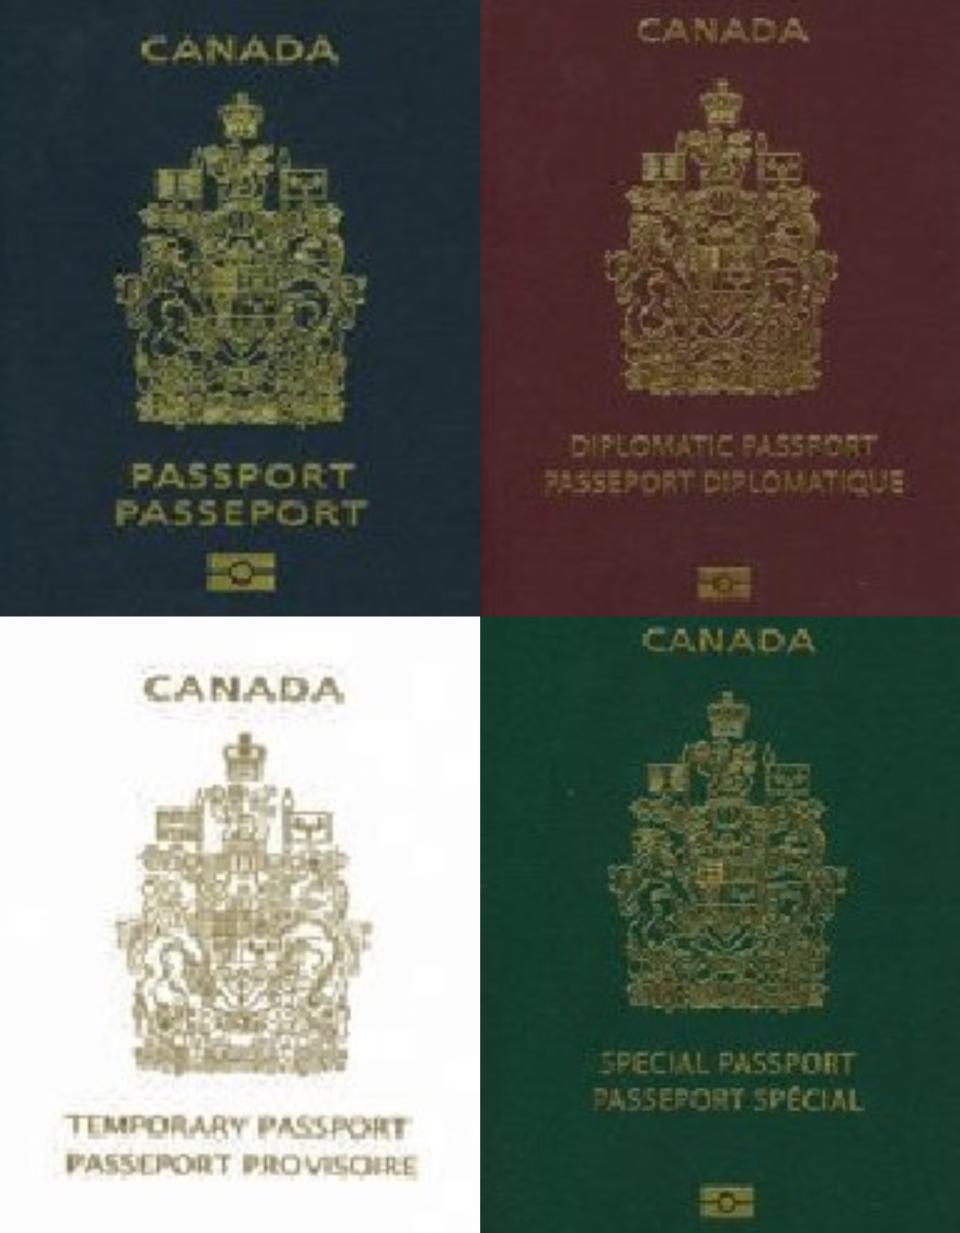 New Canadian passport - NabahaKatalina